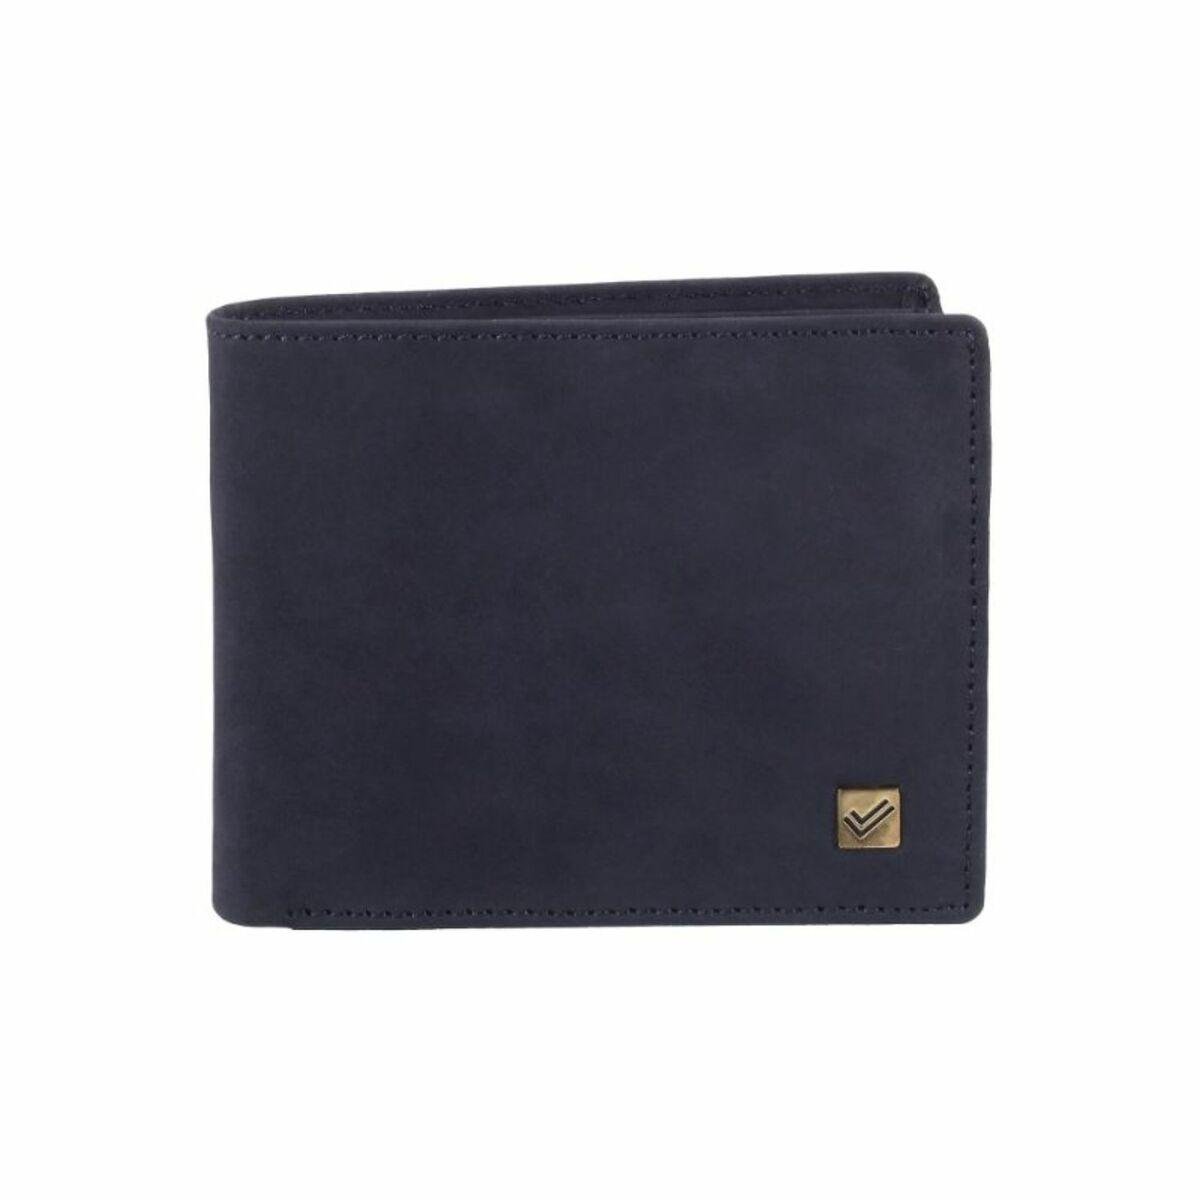 Buy Men Black Solid Genuine Leather Wallet Online - 658791 | Louis Philippe